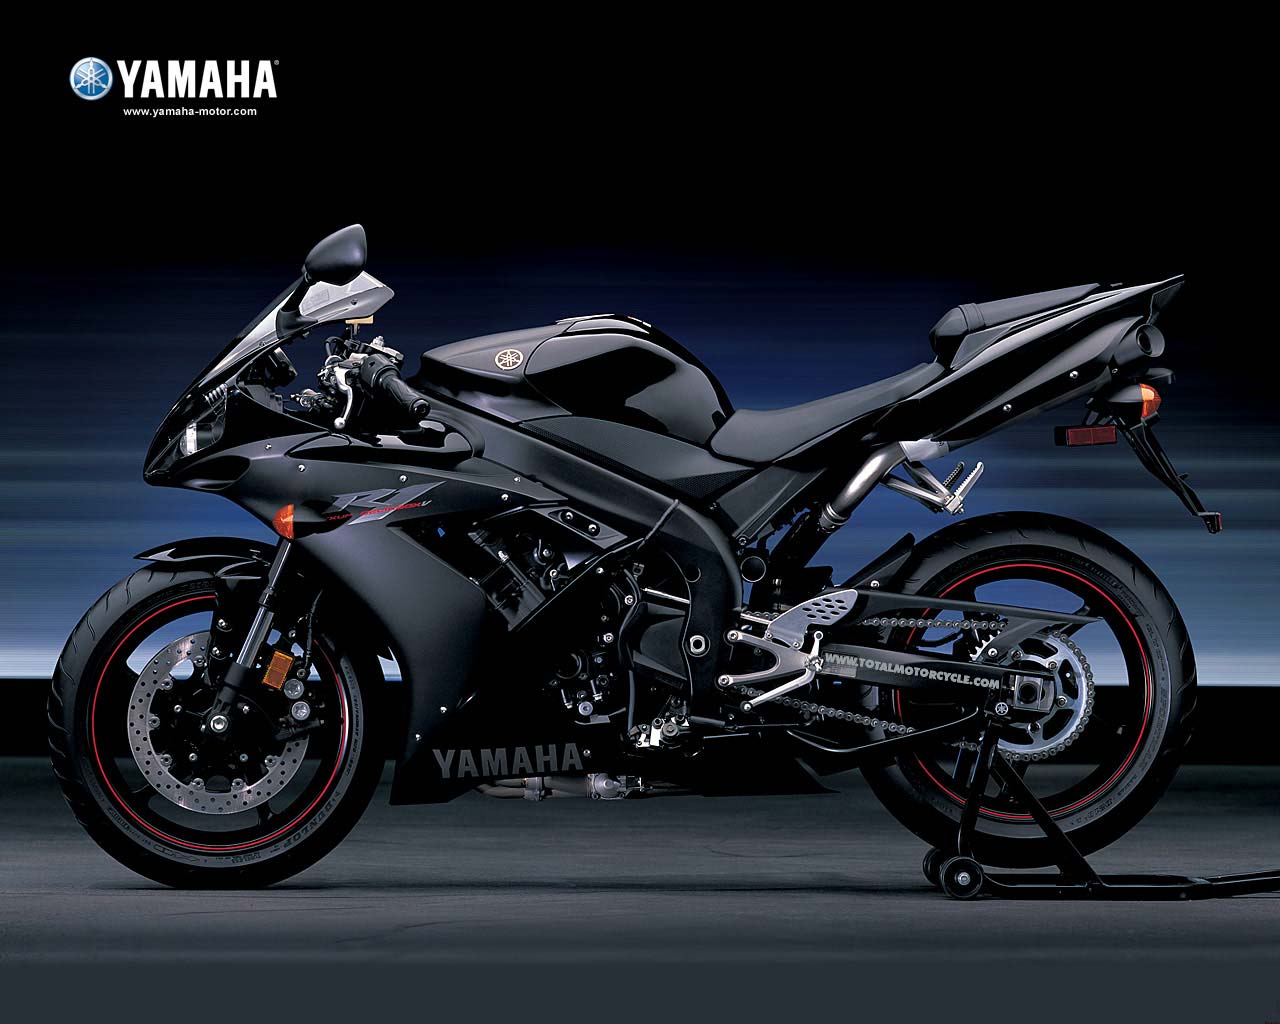 yamaha r6 wallpaper,veicolo terrestre,veicolo,motociclo,corse di superbike,veicolo a motore